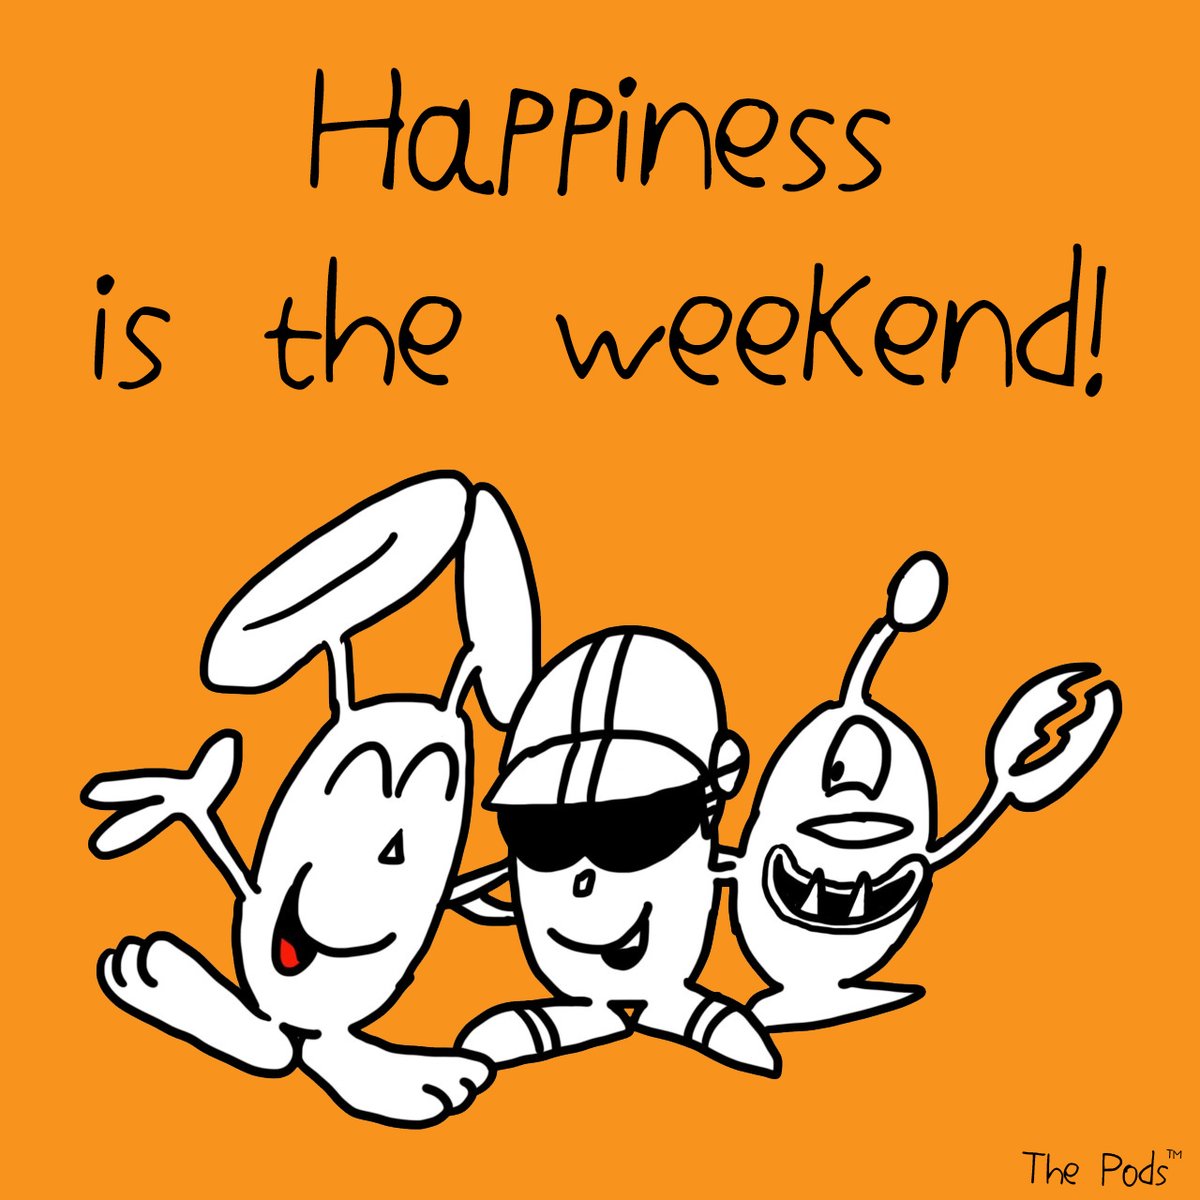 Happy weekend!
#friday #tgif #fridayfun #weekend #weekendfun
#weekendvibes #havefun #beyourself #fridayfeeling
#friyay #meetthepods #thepods #bunnypod #spypod #snappypod
#cartoon #kidscartoon #quote #quoteoftheday📷
#goodvibes
#fridayvibes